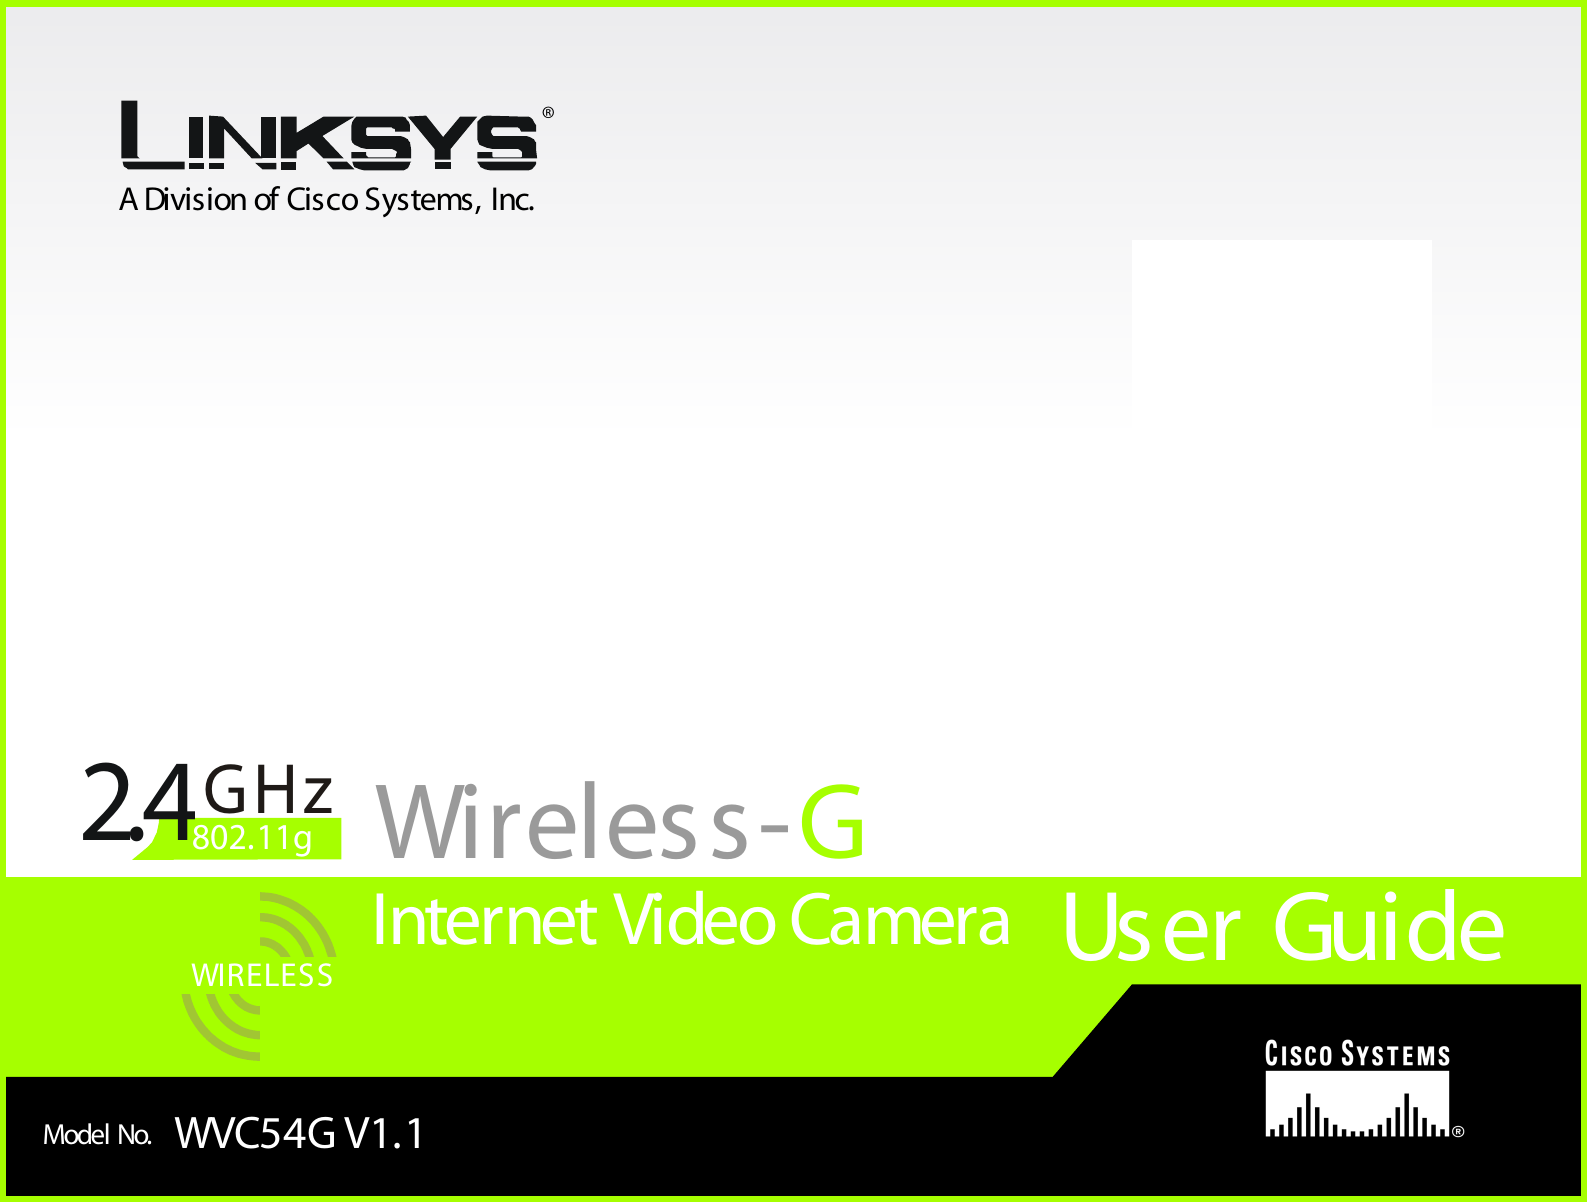 A Division of Cisco Systems, Inc.®Model No.Internet Video CameraWireless-GWVC54G V1.1User GuideWIRELESSGHz2.4802.11g